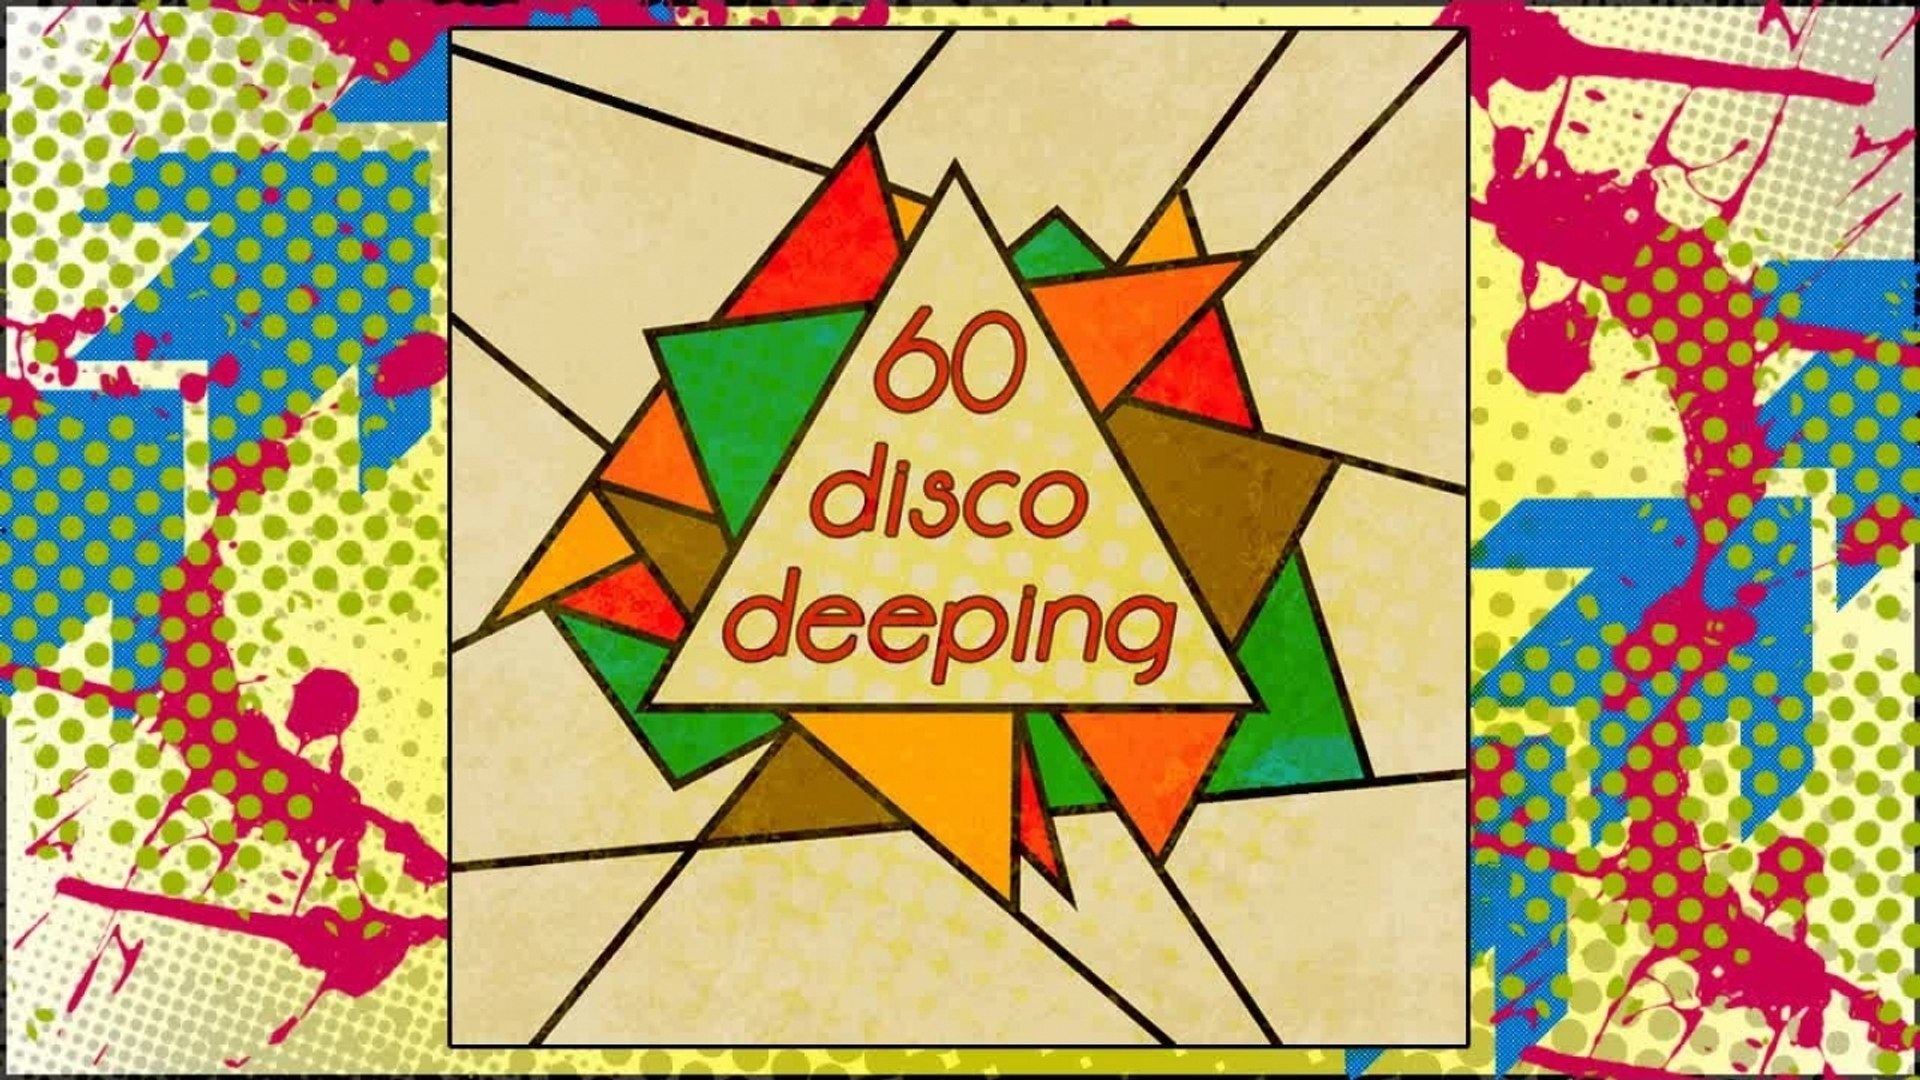 Johnny Deeper - Mars - 60 DISCO DEEPING (720p)